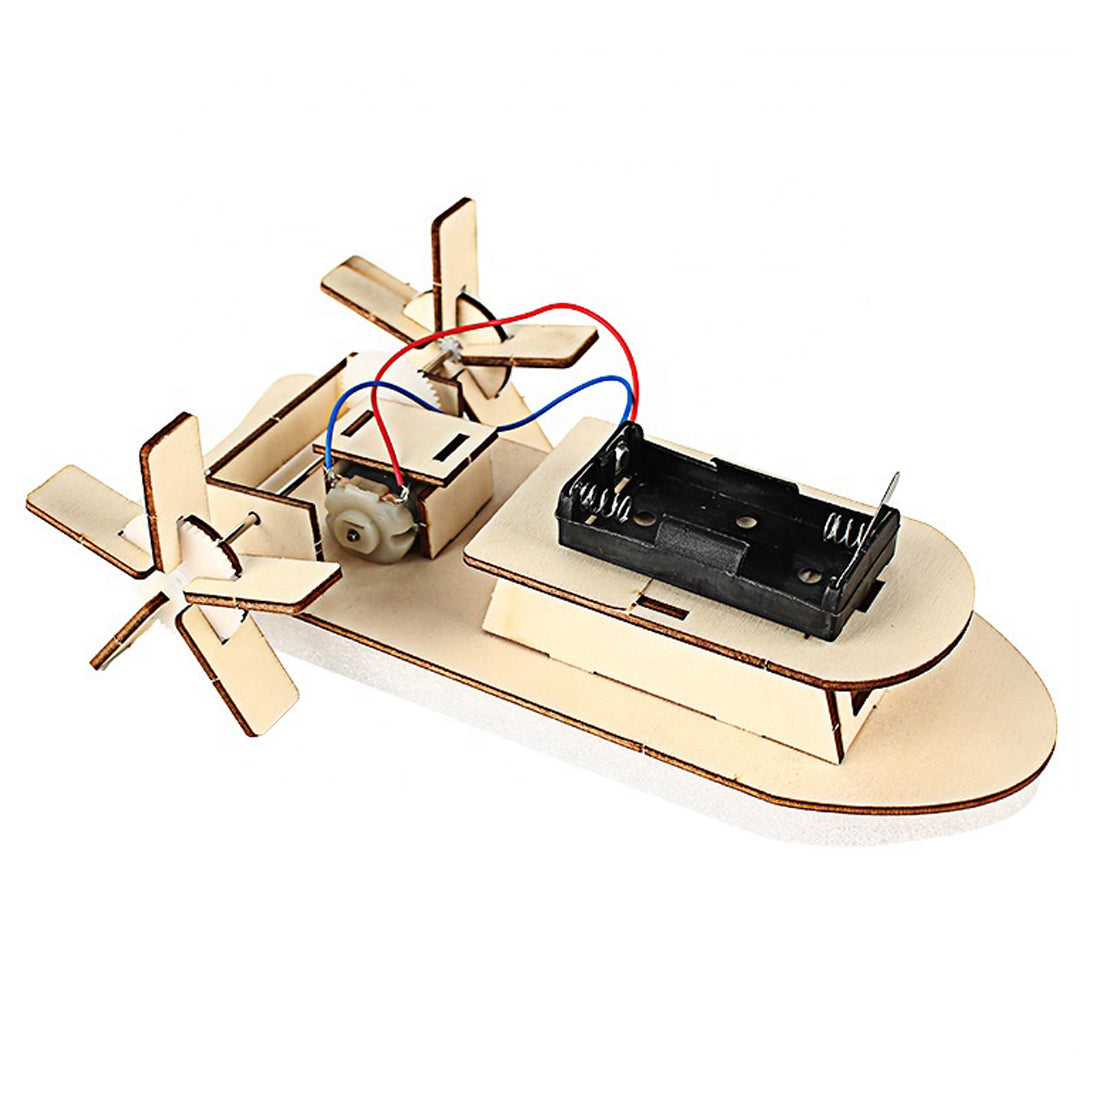 diy-stem-kids-best-toys-material-speed-wooden-boat-toy.jpg